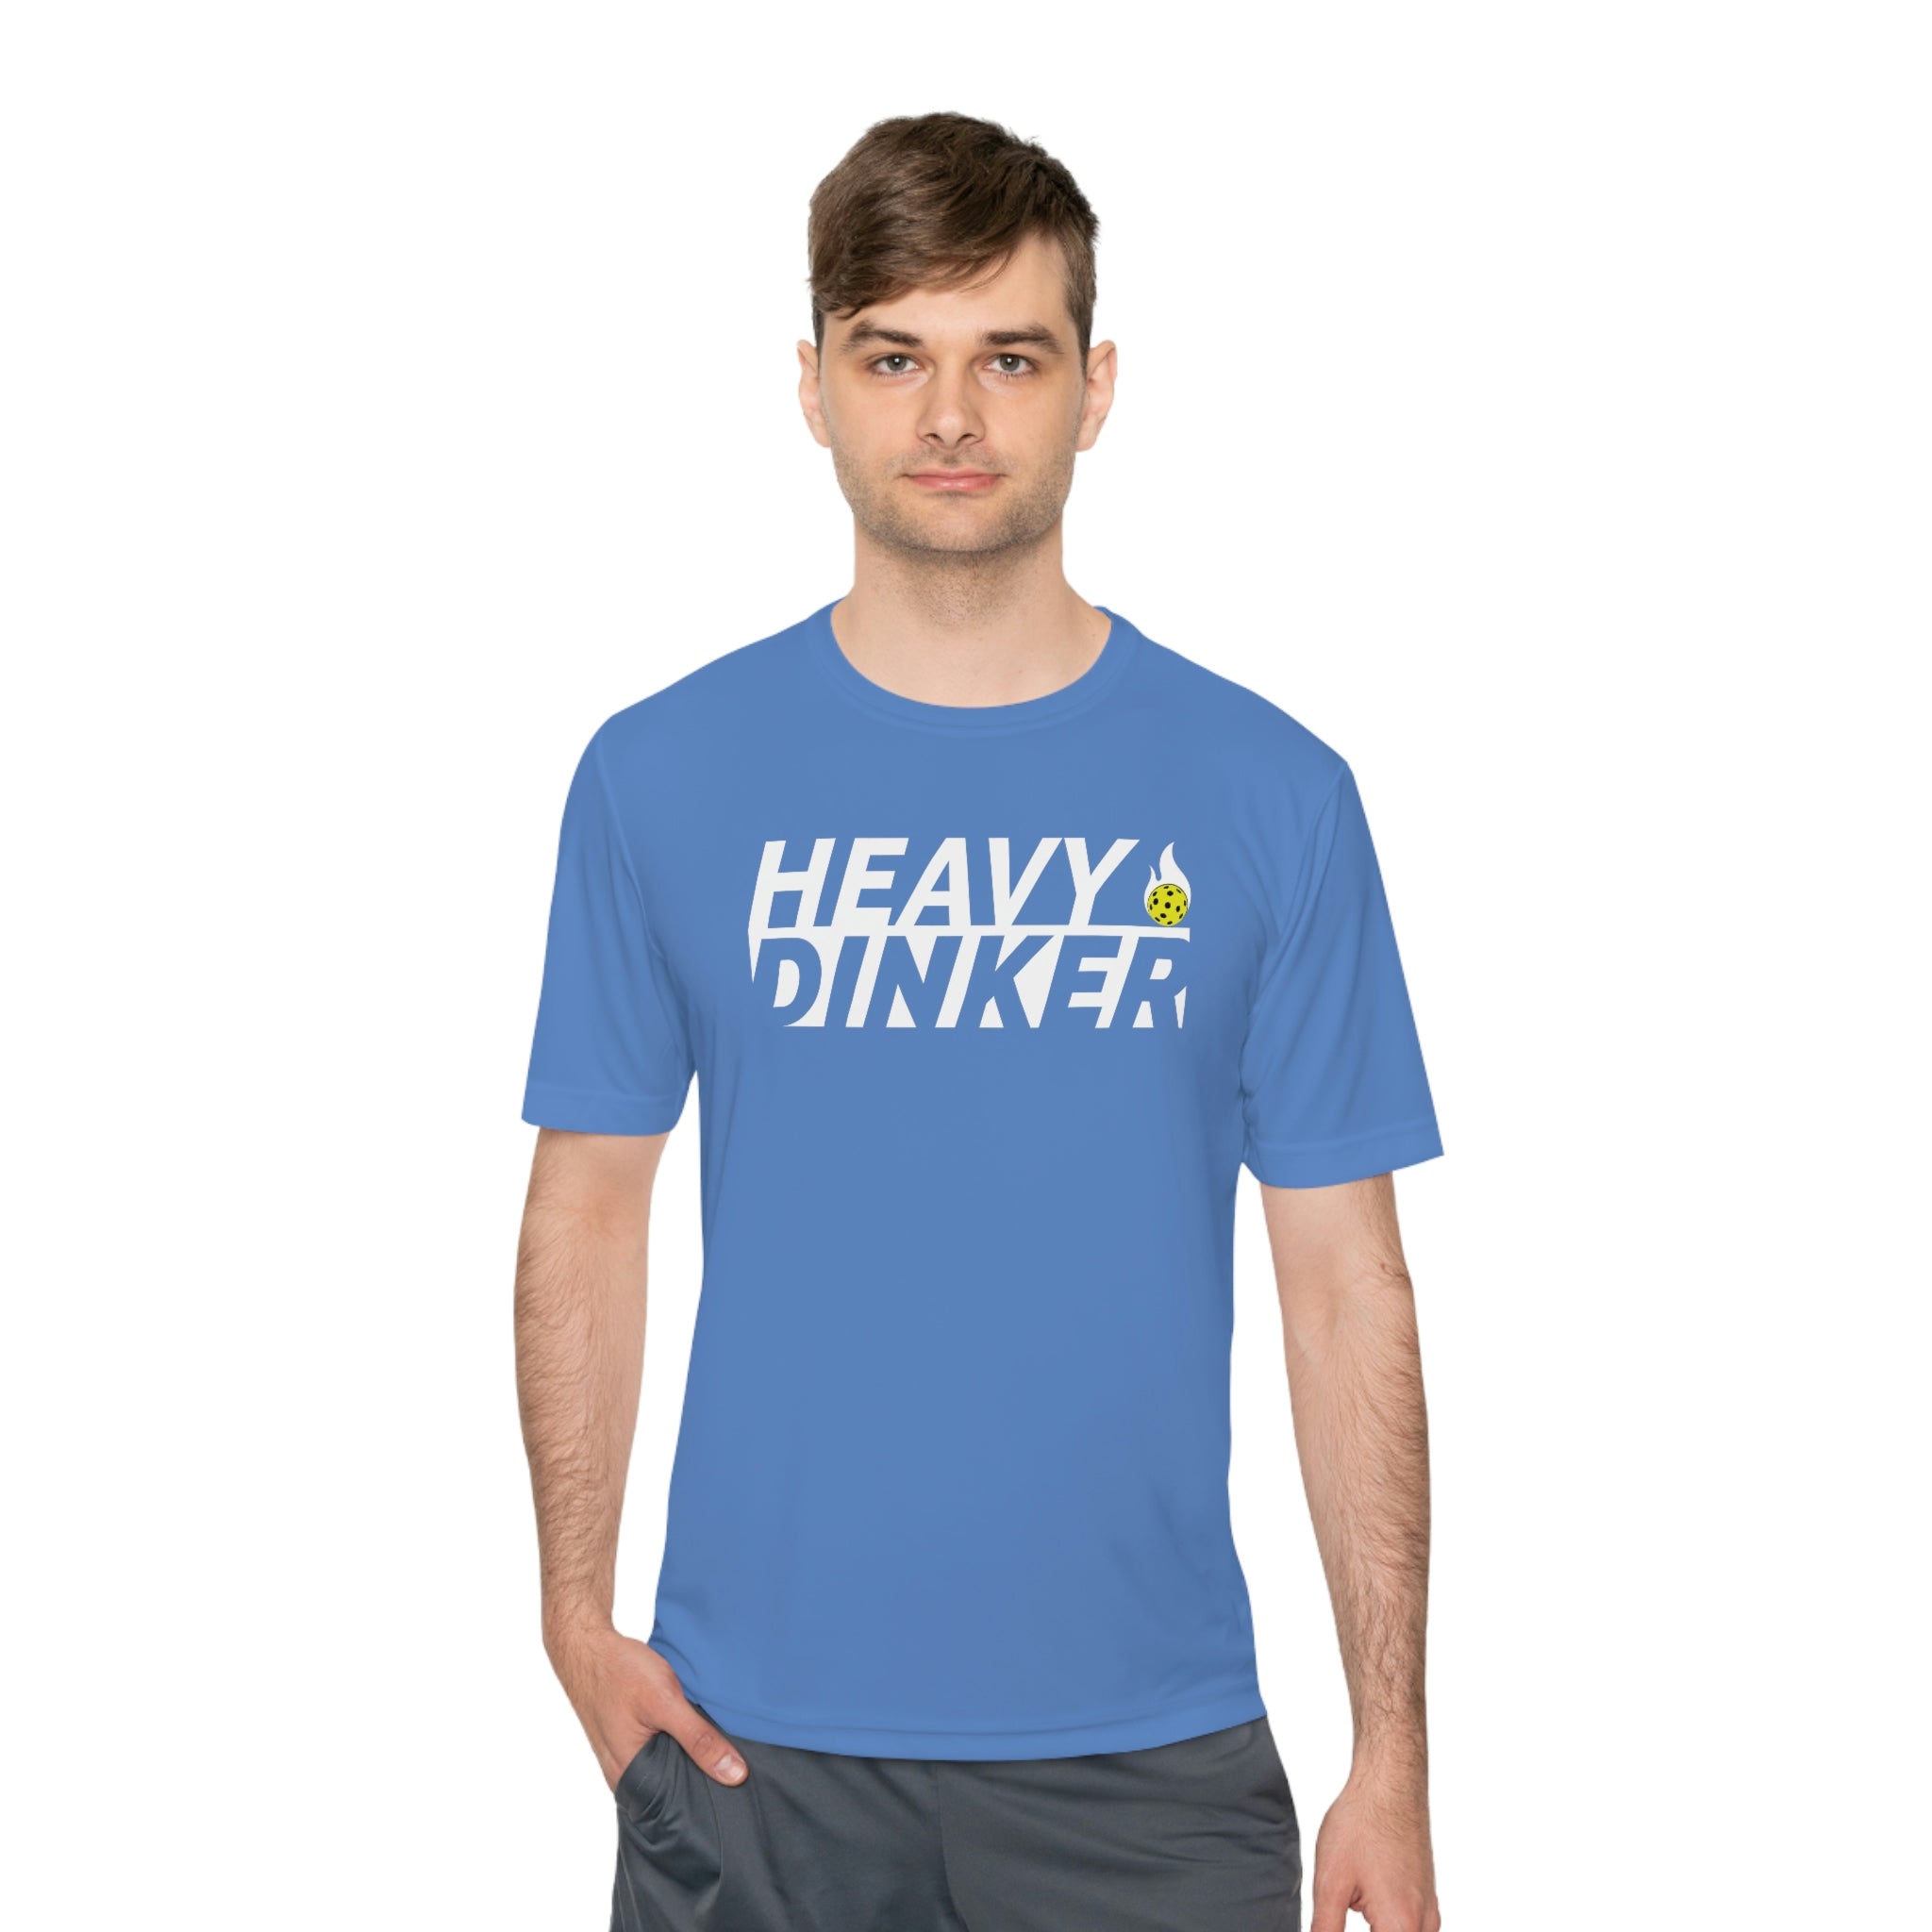 man wearing light blue heavy dinker men's athletic pickleball apparel shirt front view